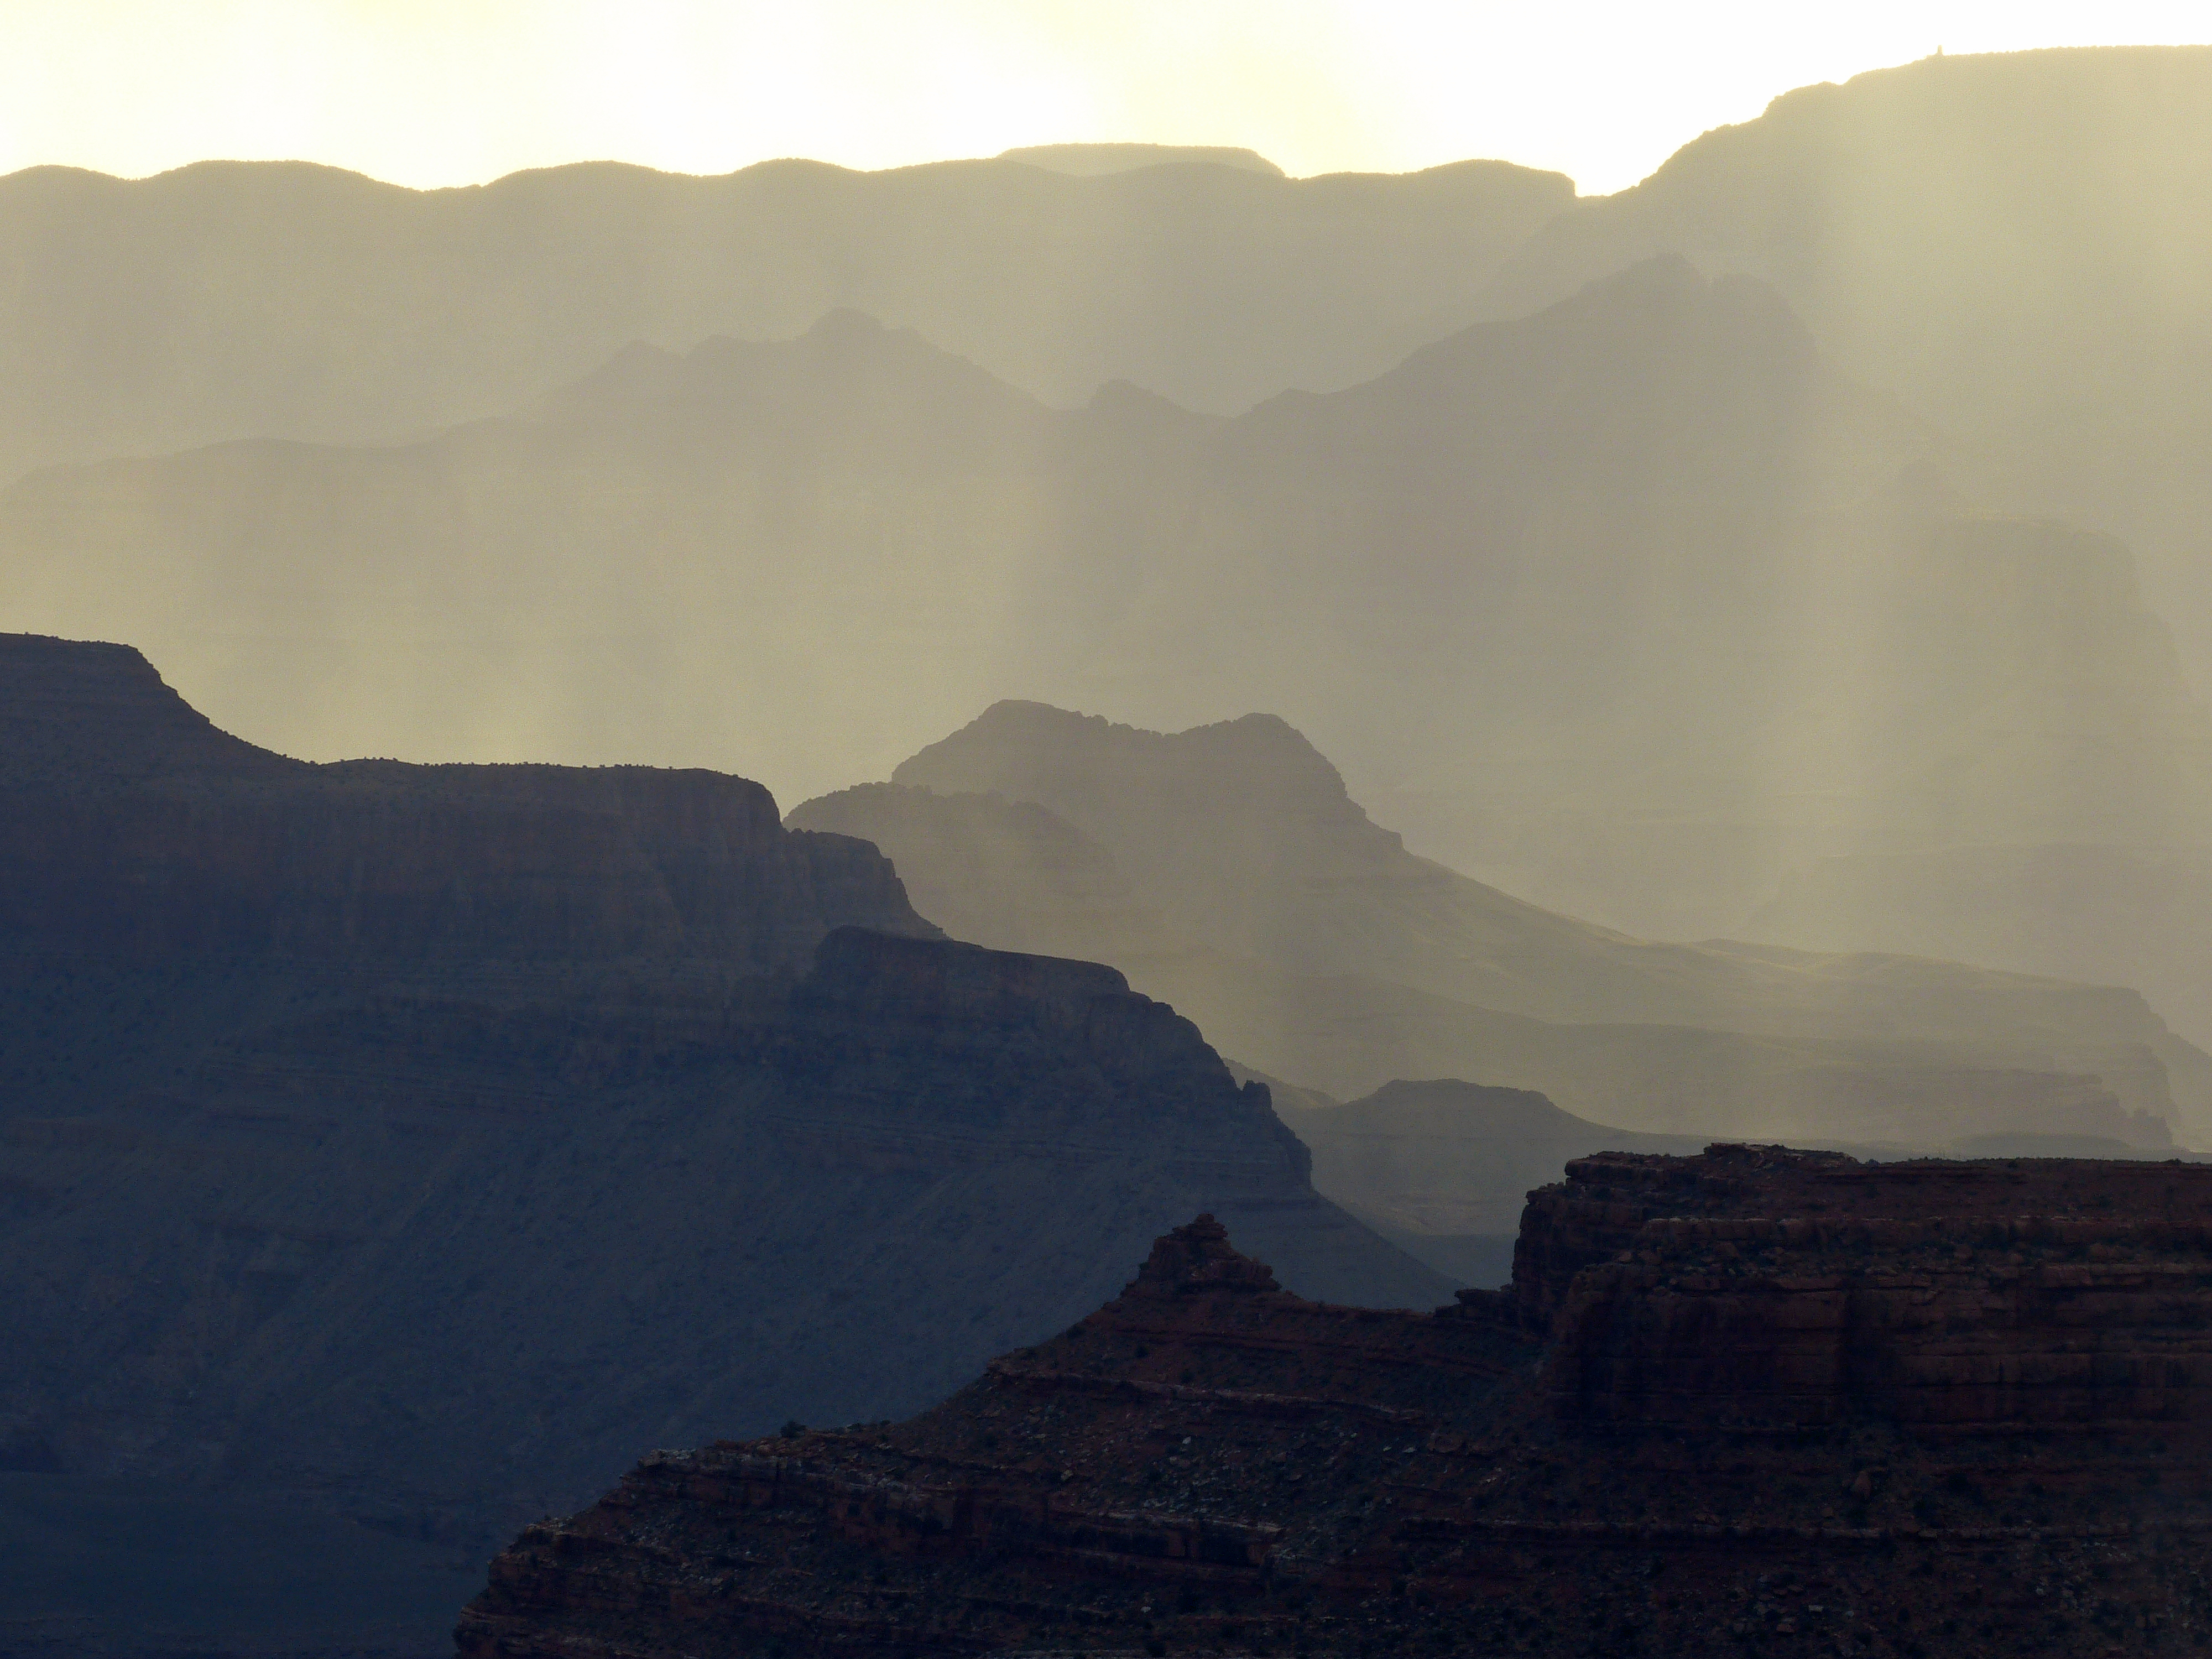 Clouds, early morning light  -  Yavapai Point, Grand Canyon National Park (South Rim), Arizona
